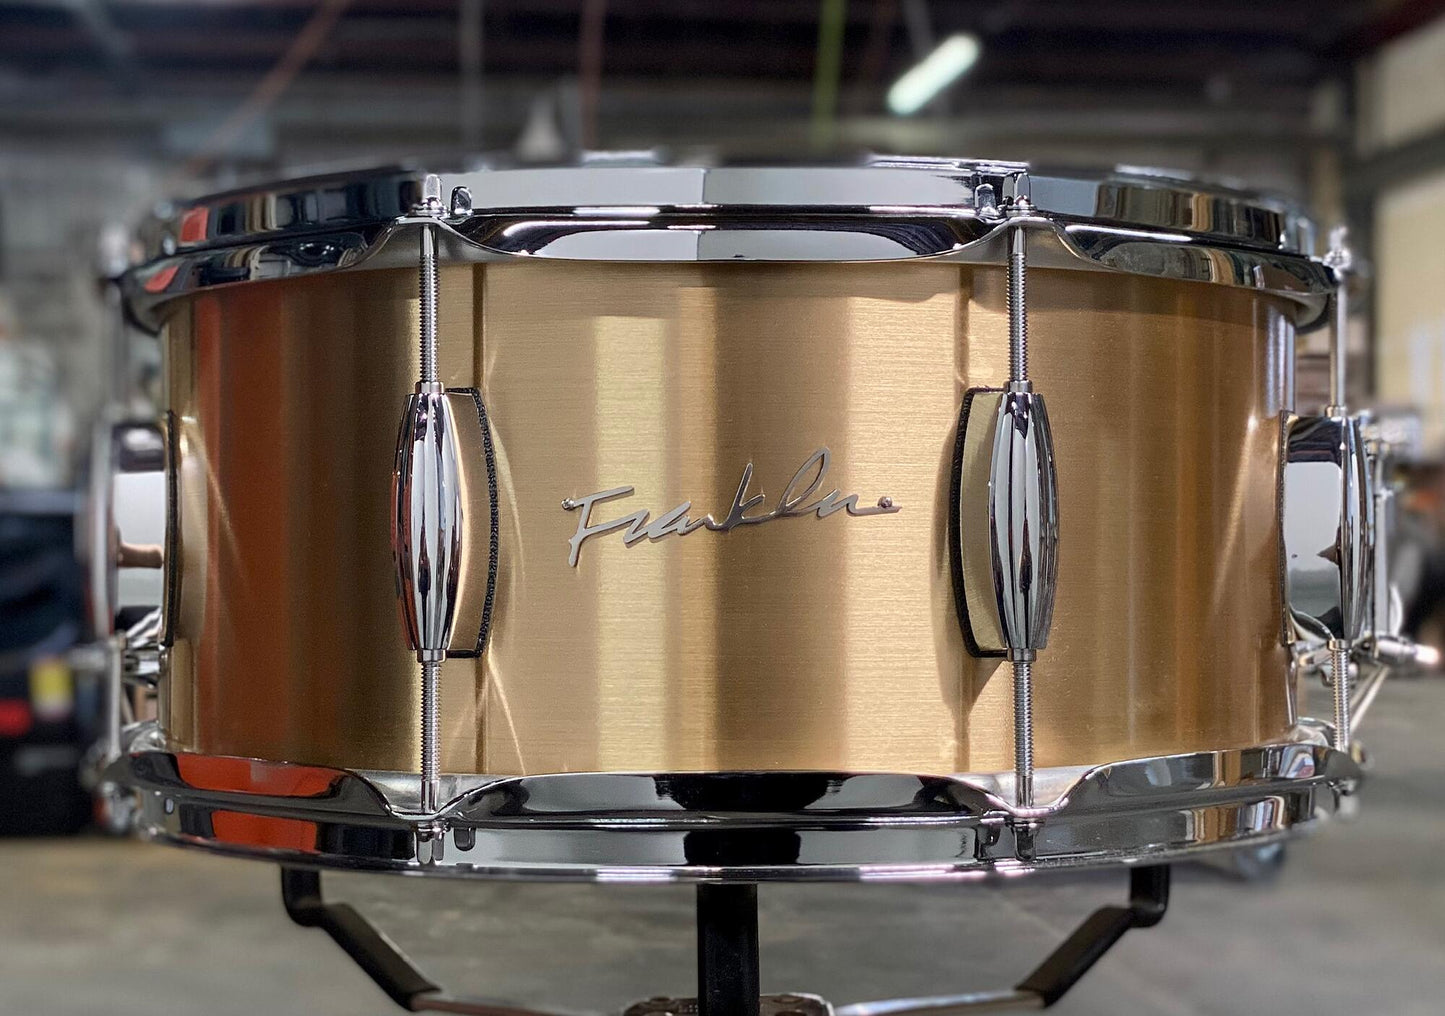 Franklin Brass - Snare Drum